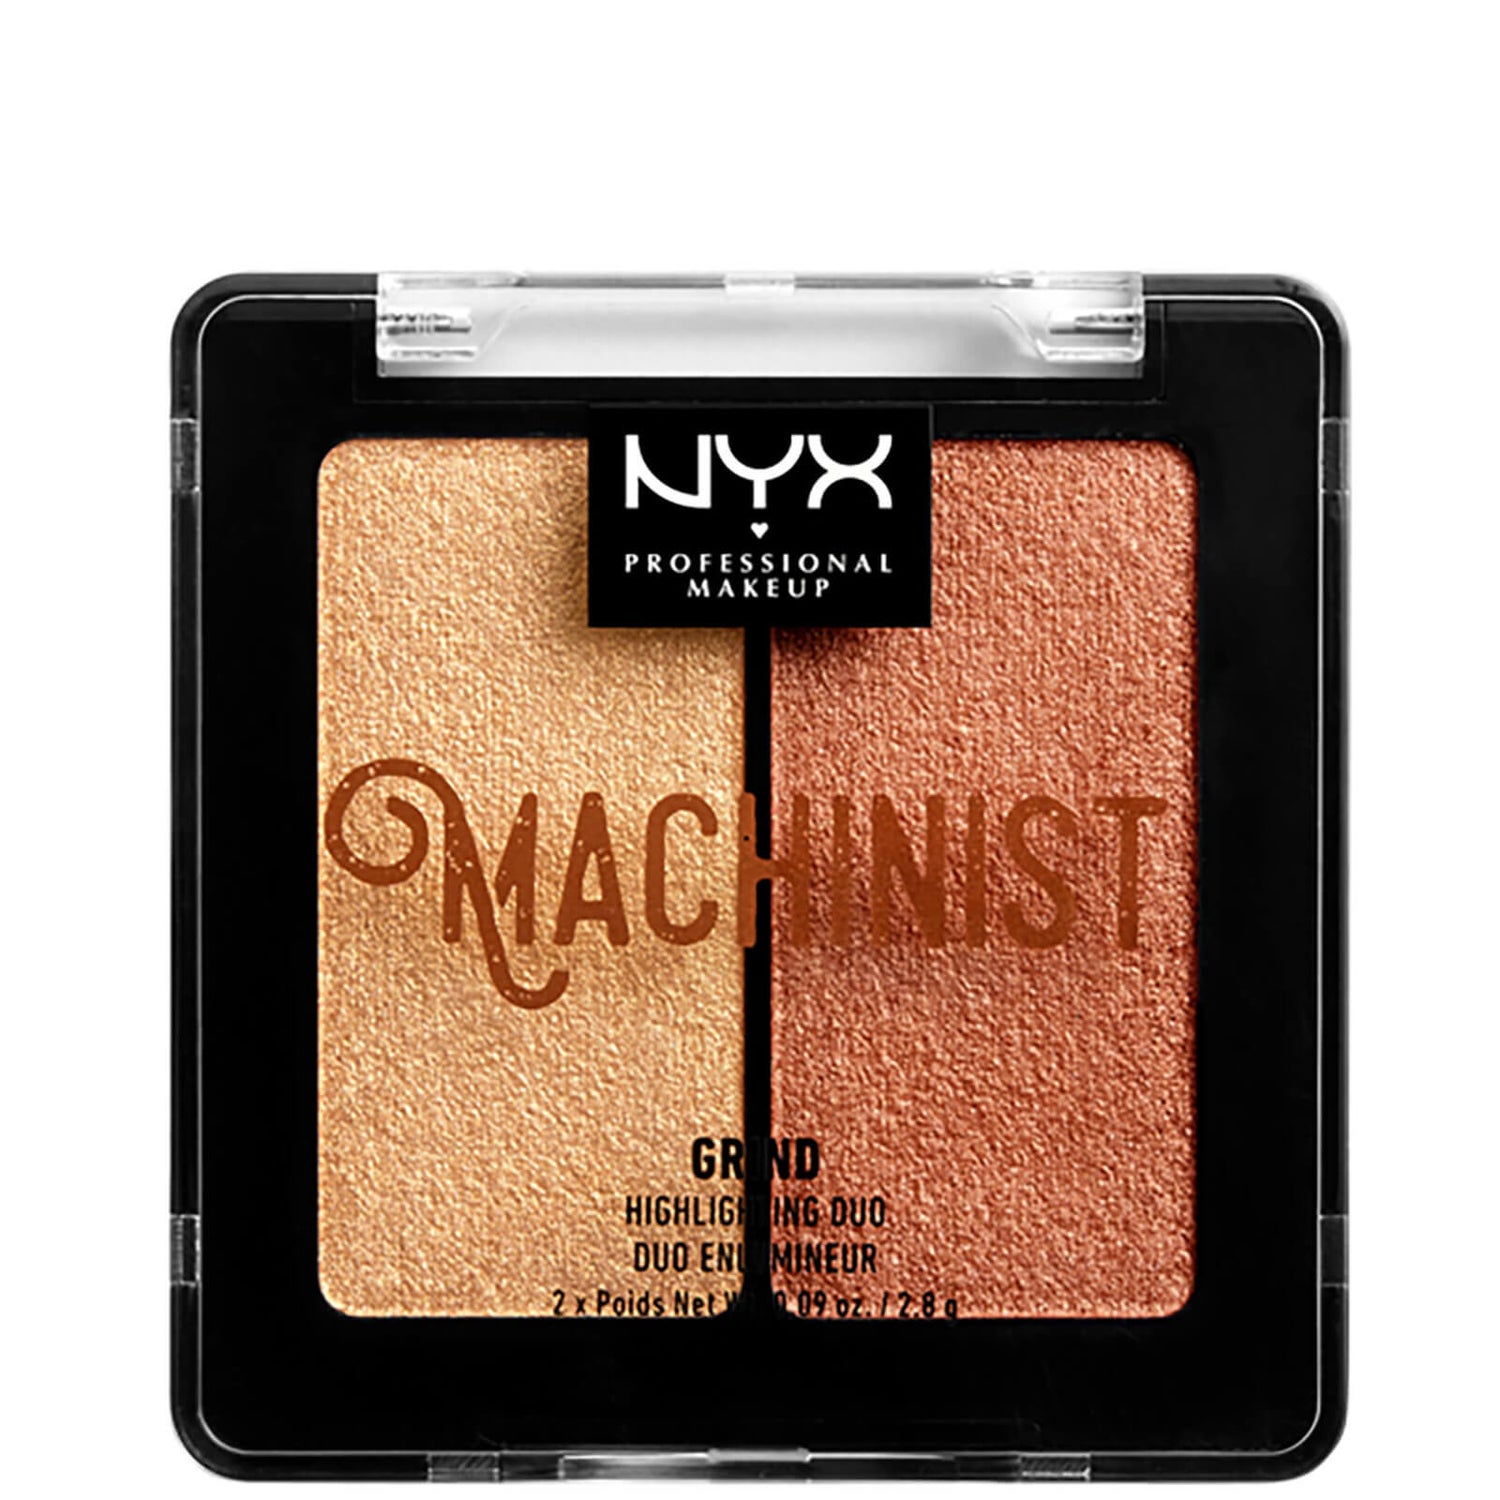 Duo d'Enlumineurs Machinist NYX Professional Makeup – Grind